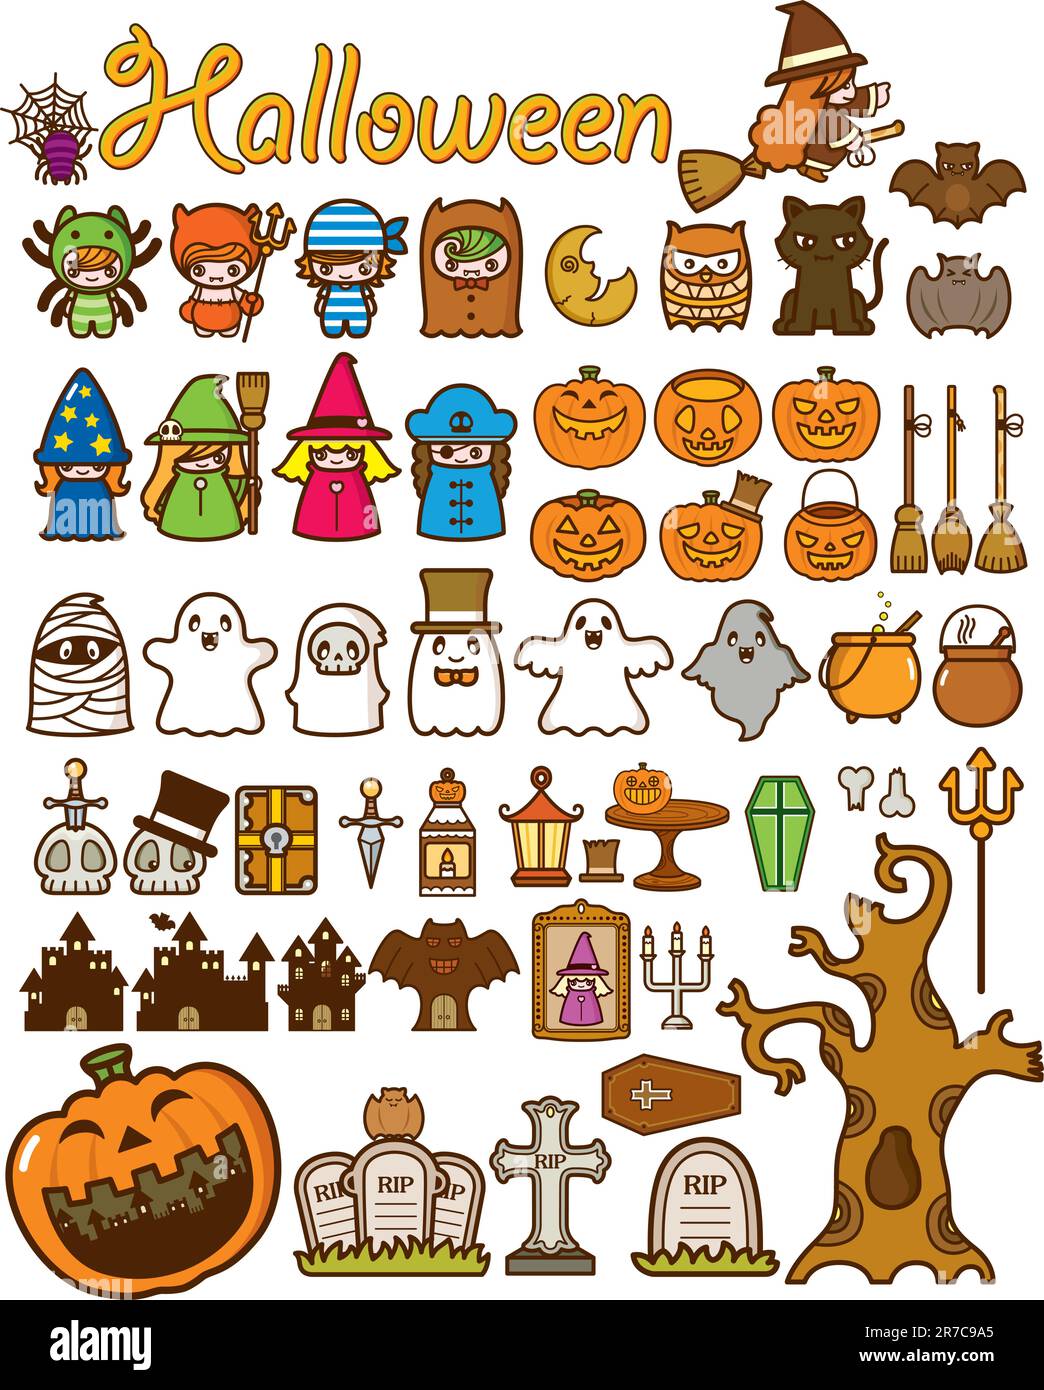 Illustration of Halloween Holiday Series. Stock Vector